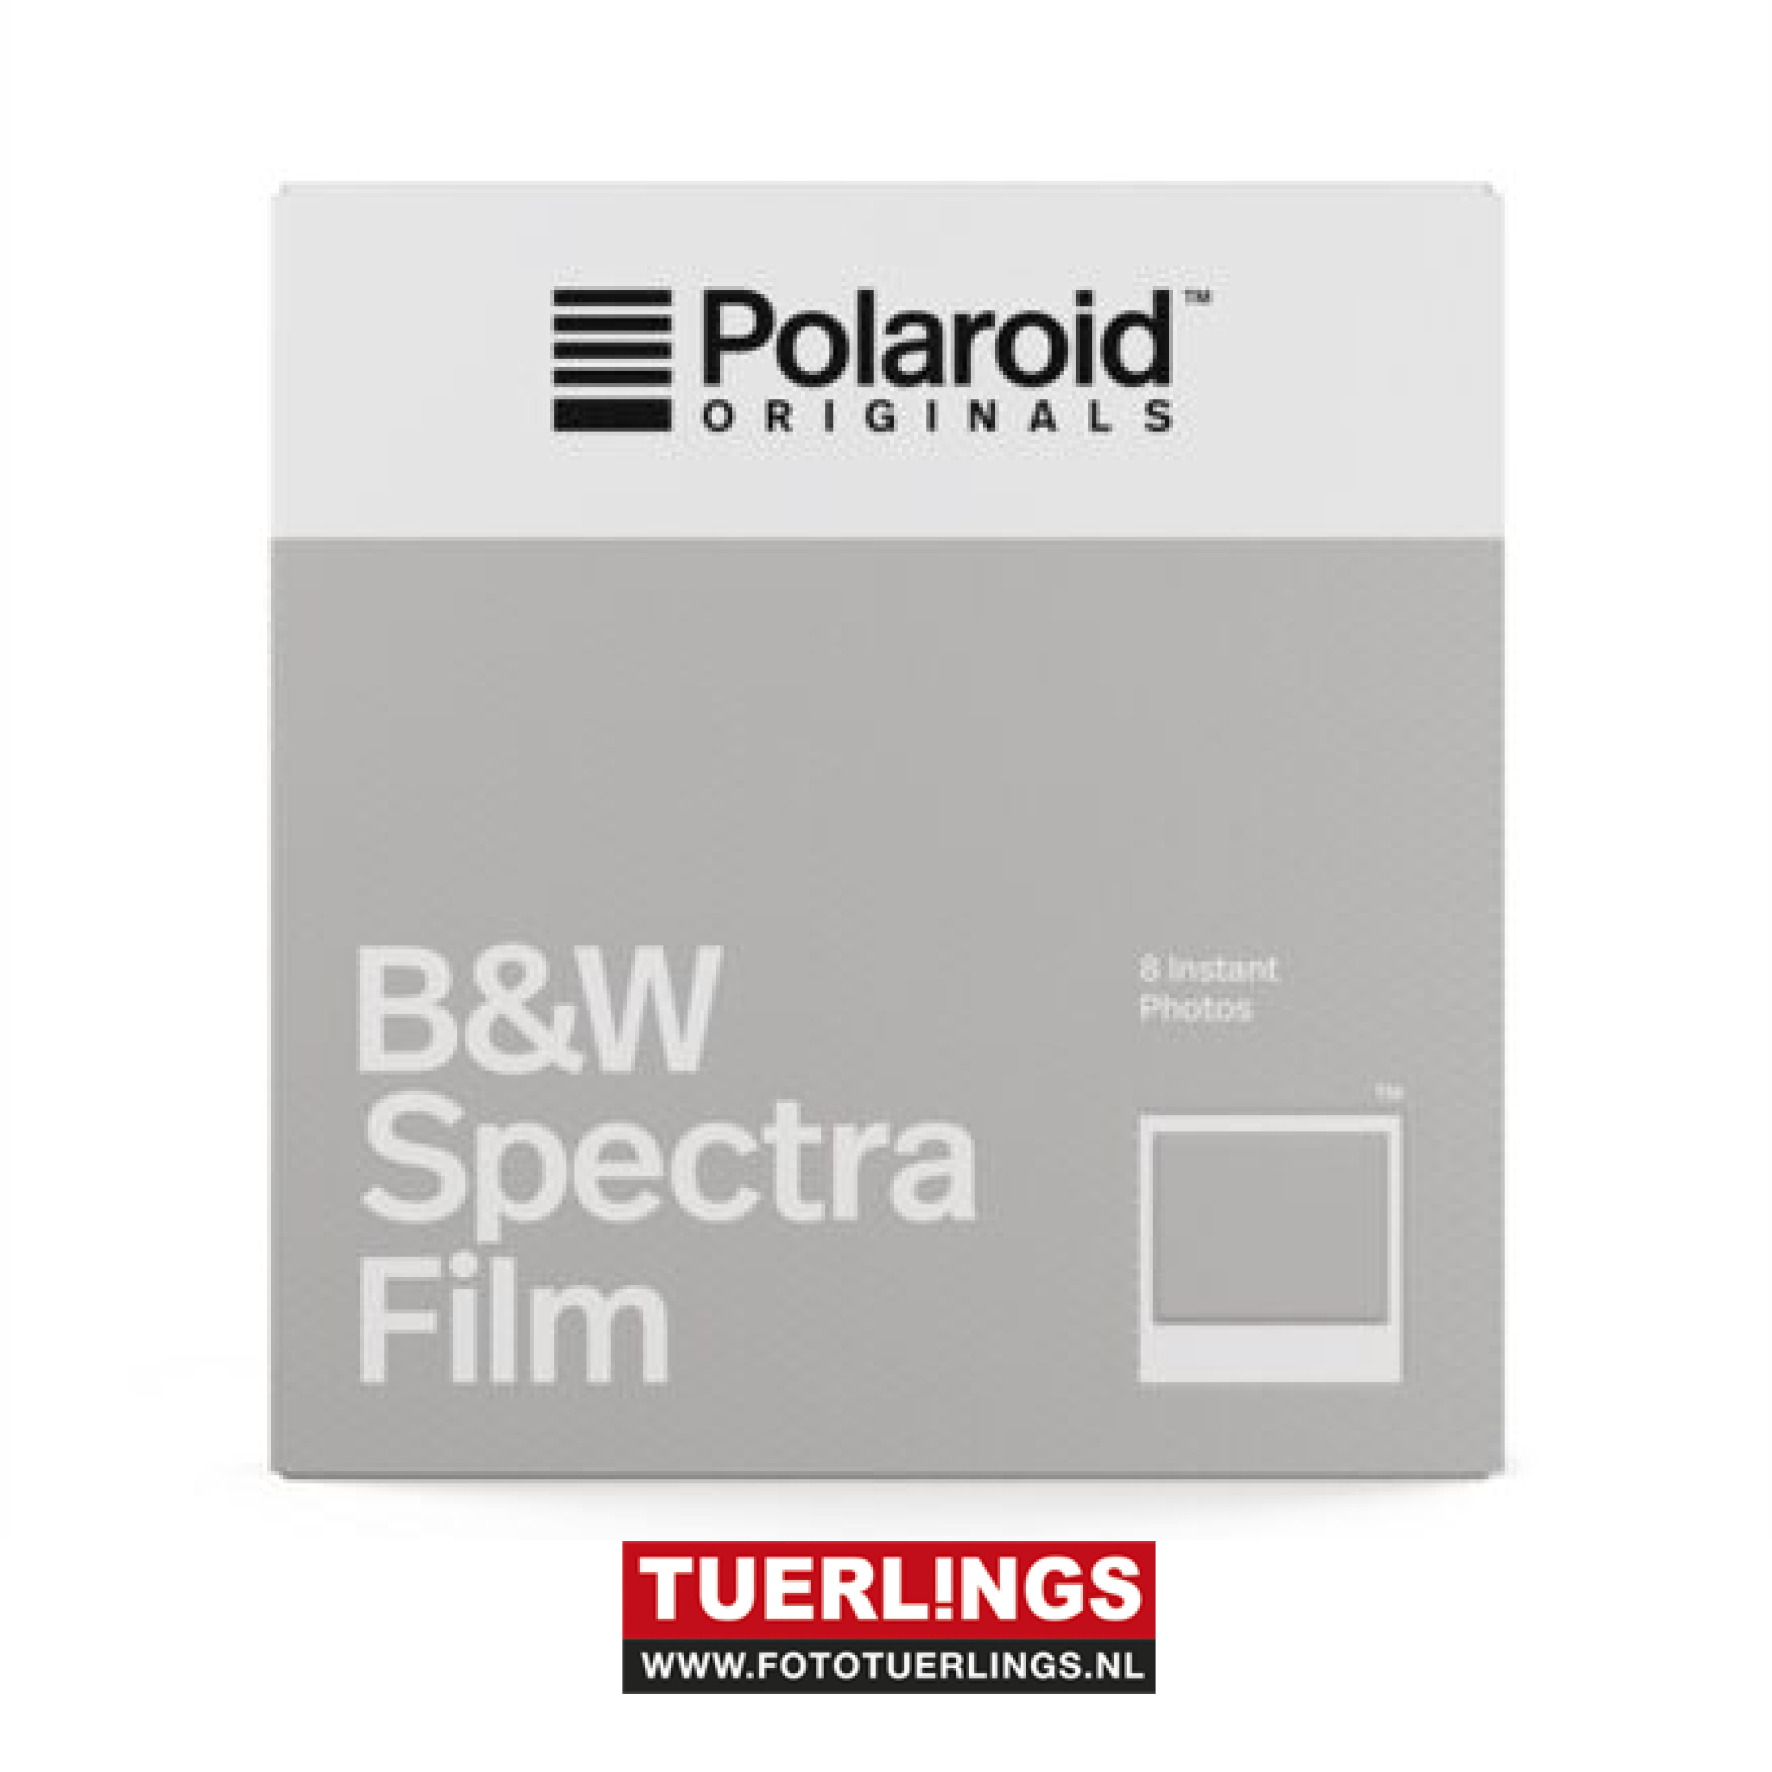 medley Intrekking vier keer Polaroid Zwart-Wit Film voor Image en Spectra Camera's (Laatste films  OP=OP) Foto Tuerlings -